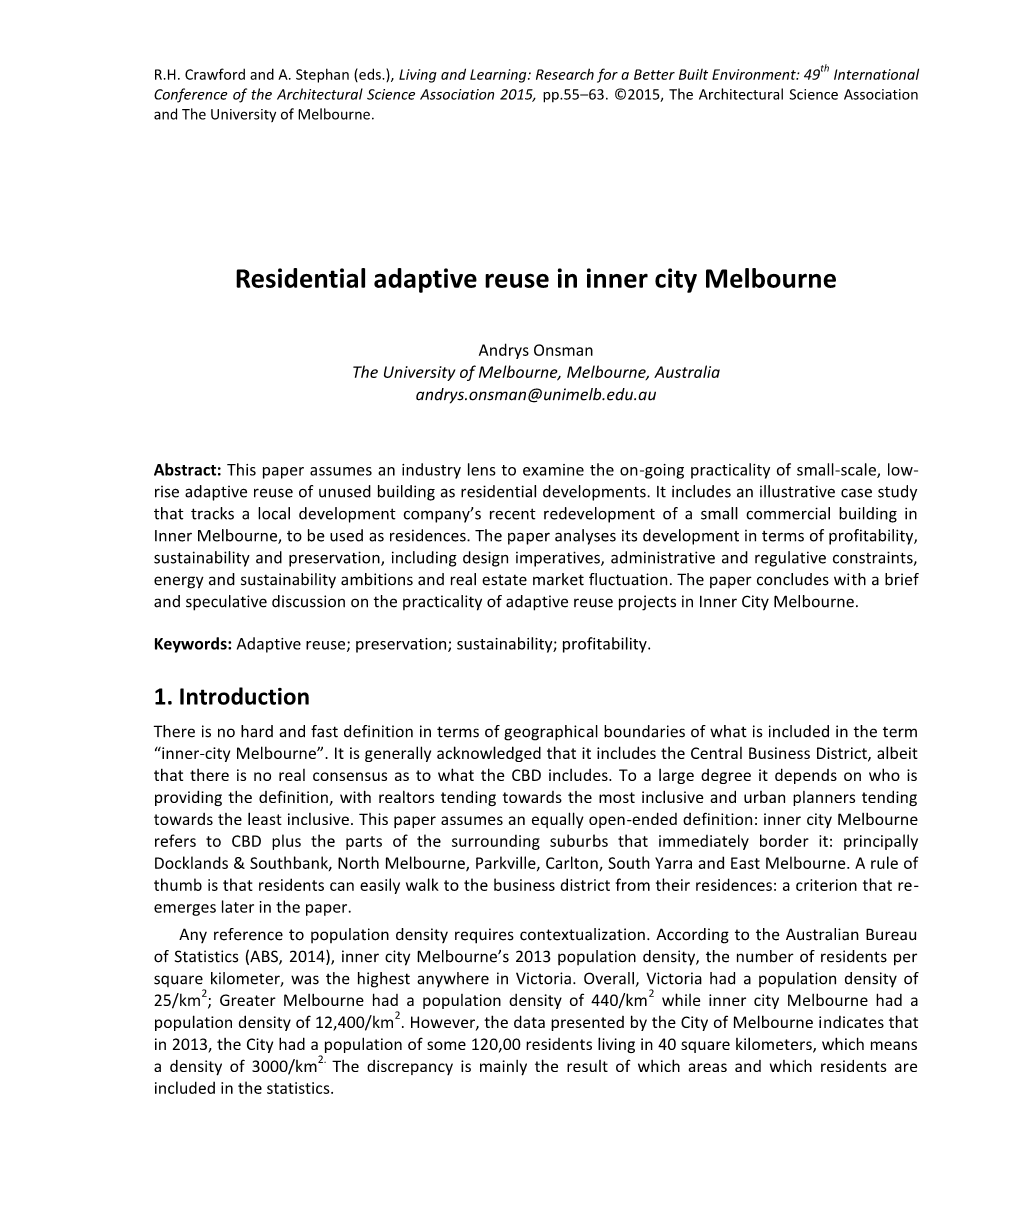 Residential Adaptive Reuse in Inner City Melbourne